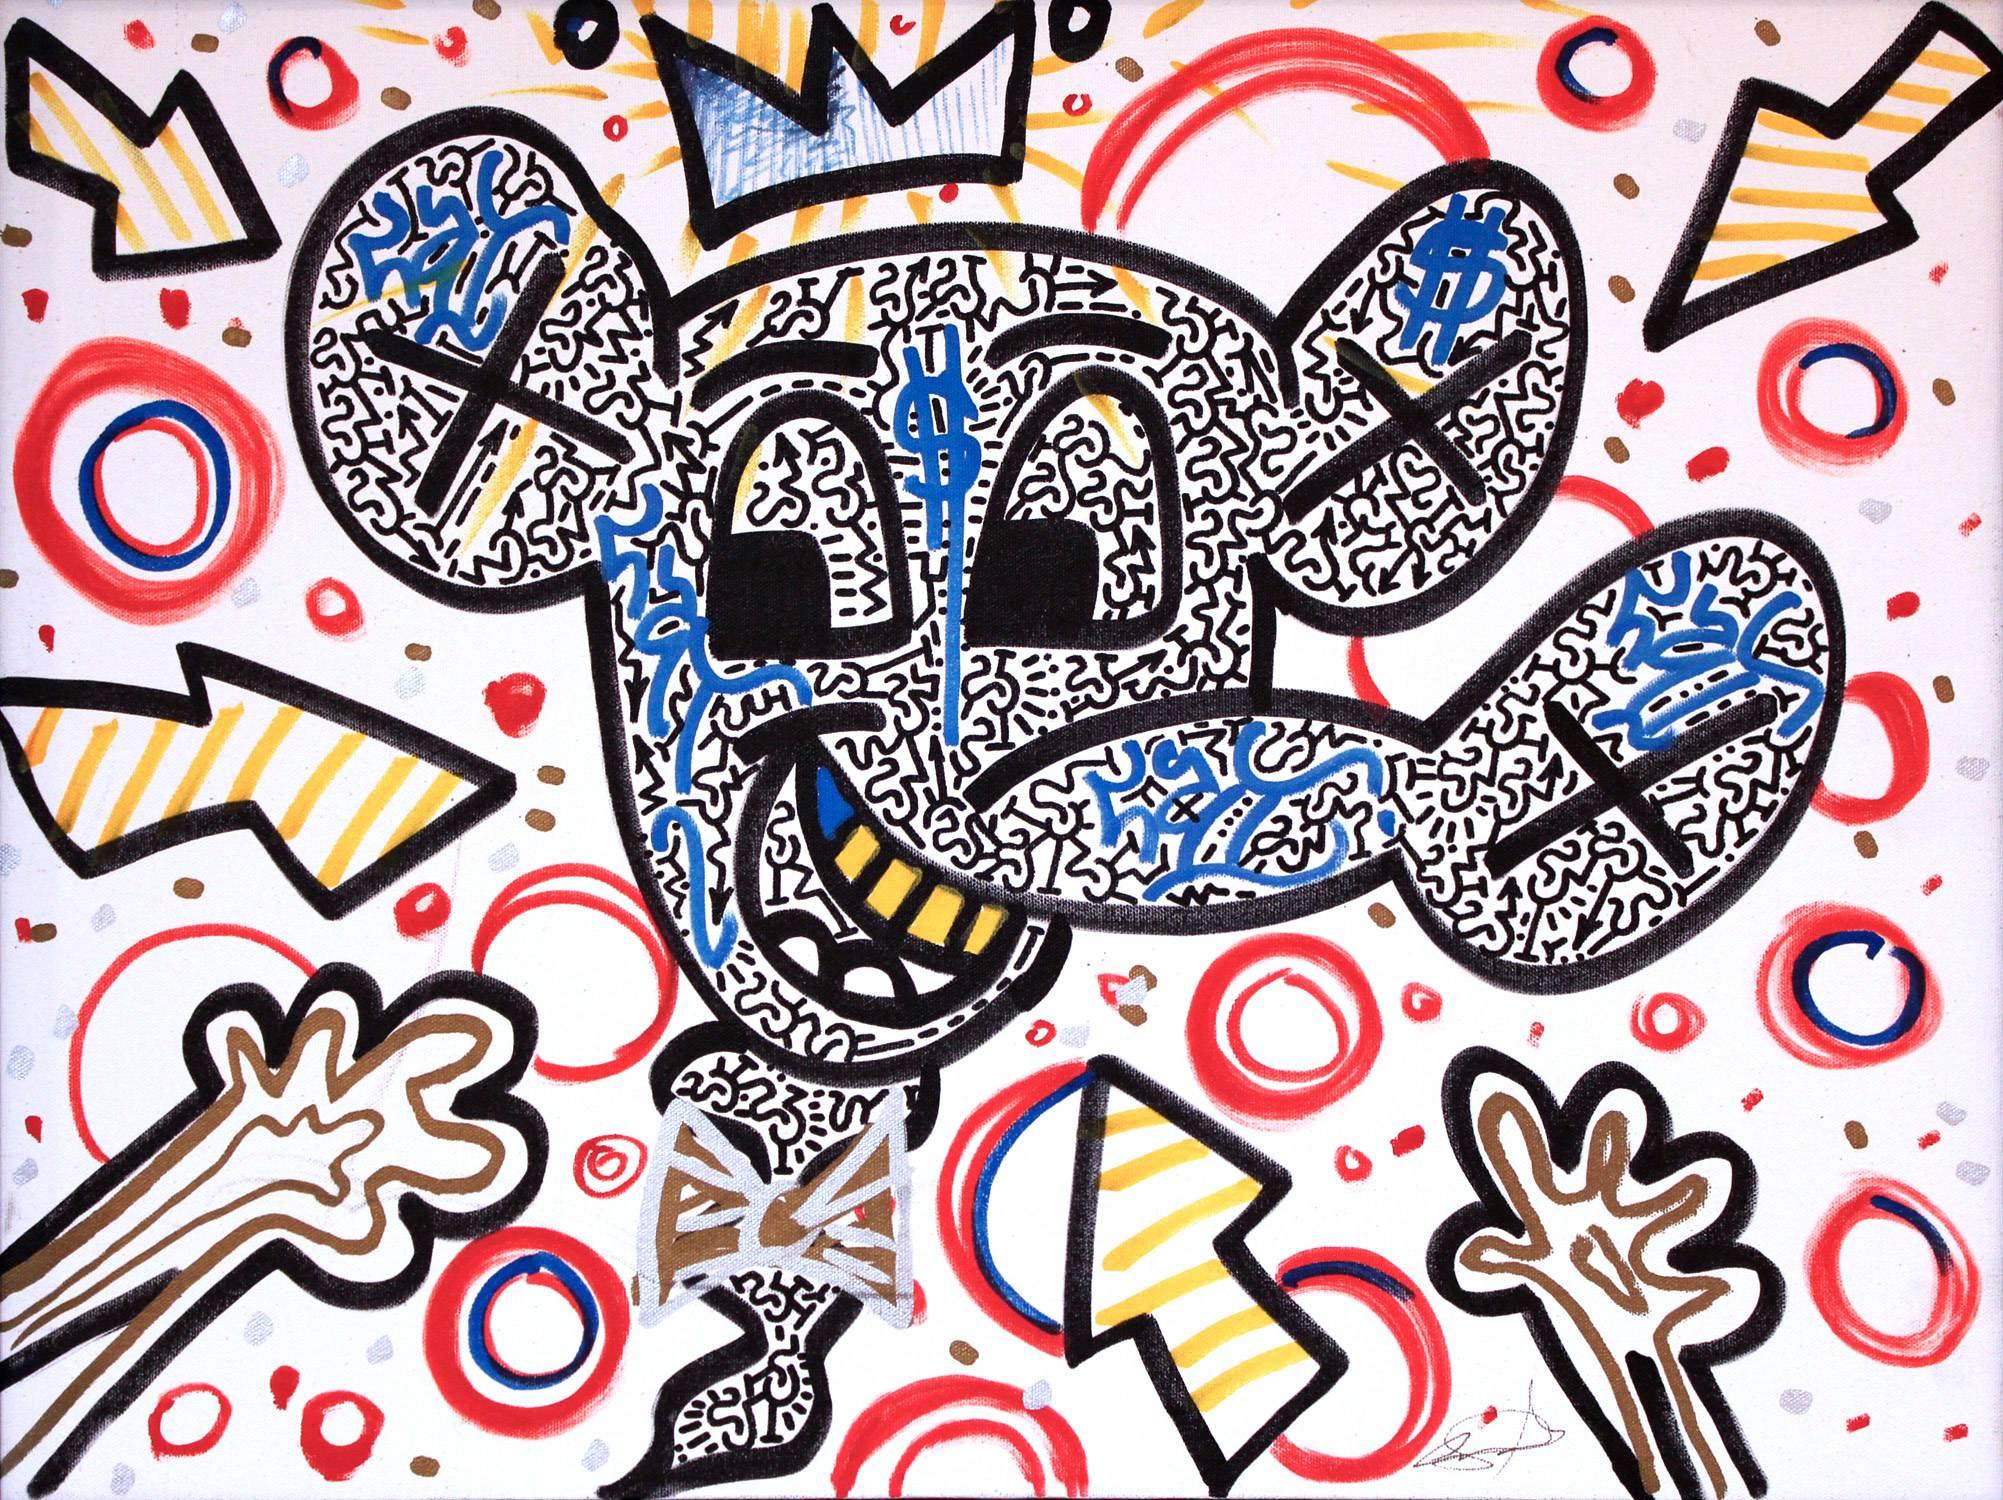 Mouse King - Painting by LA II (Angel Ortiz)